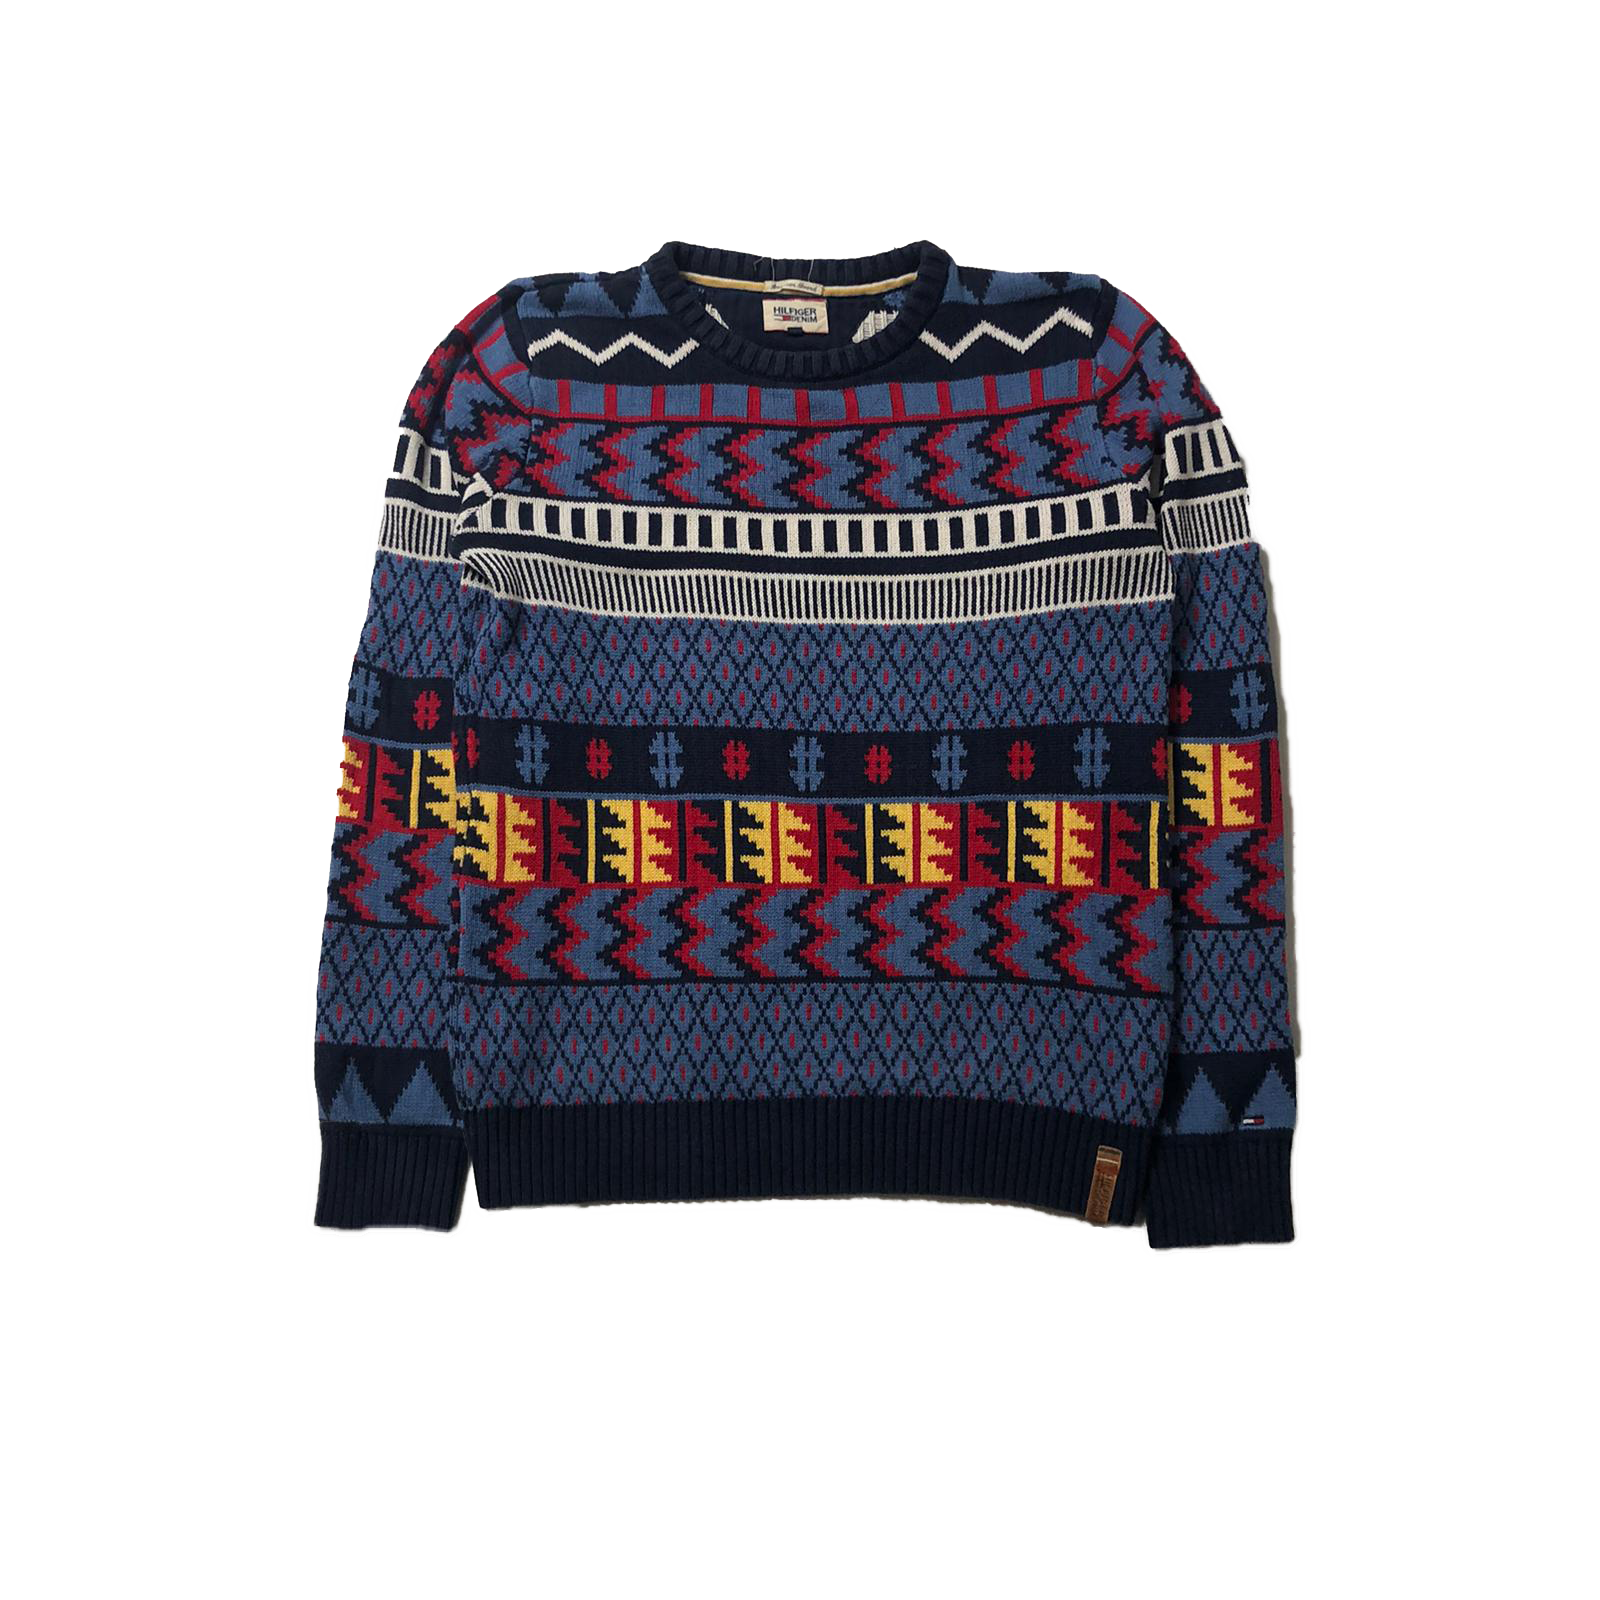 Tommy Hilfiger knit sweatshirt